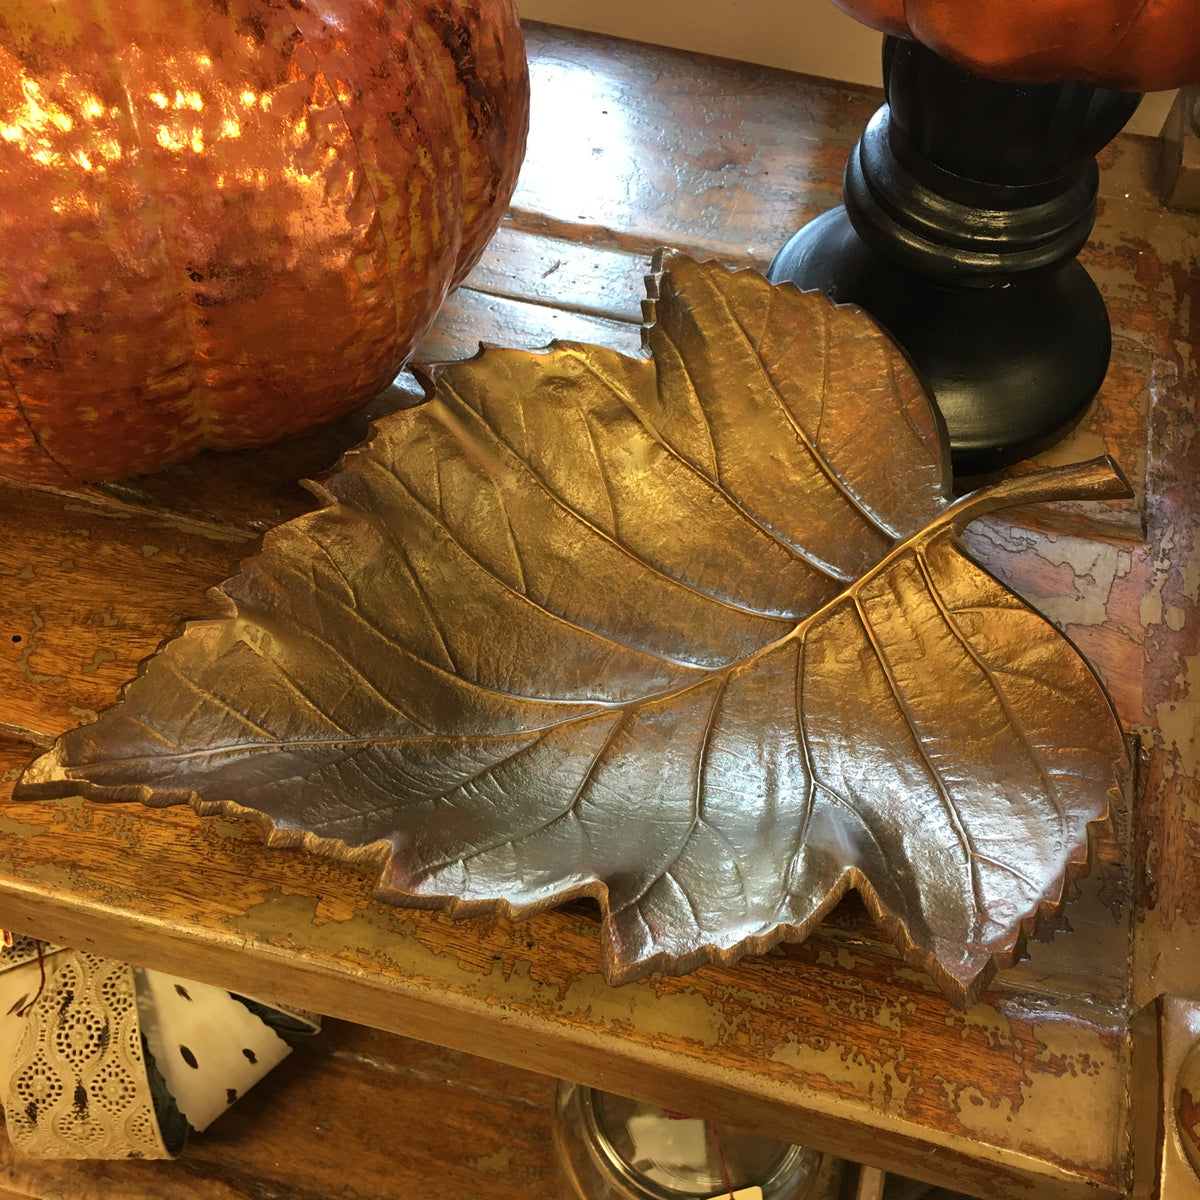 Antique Brass Maple Leaf Dish